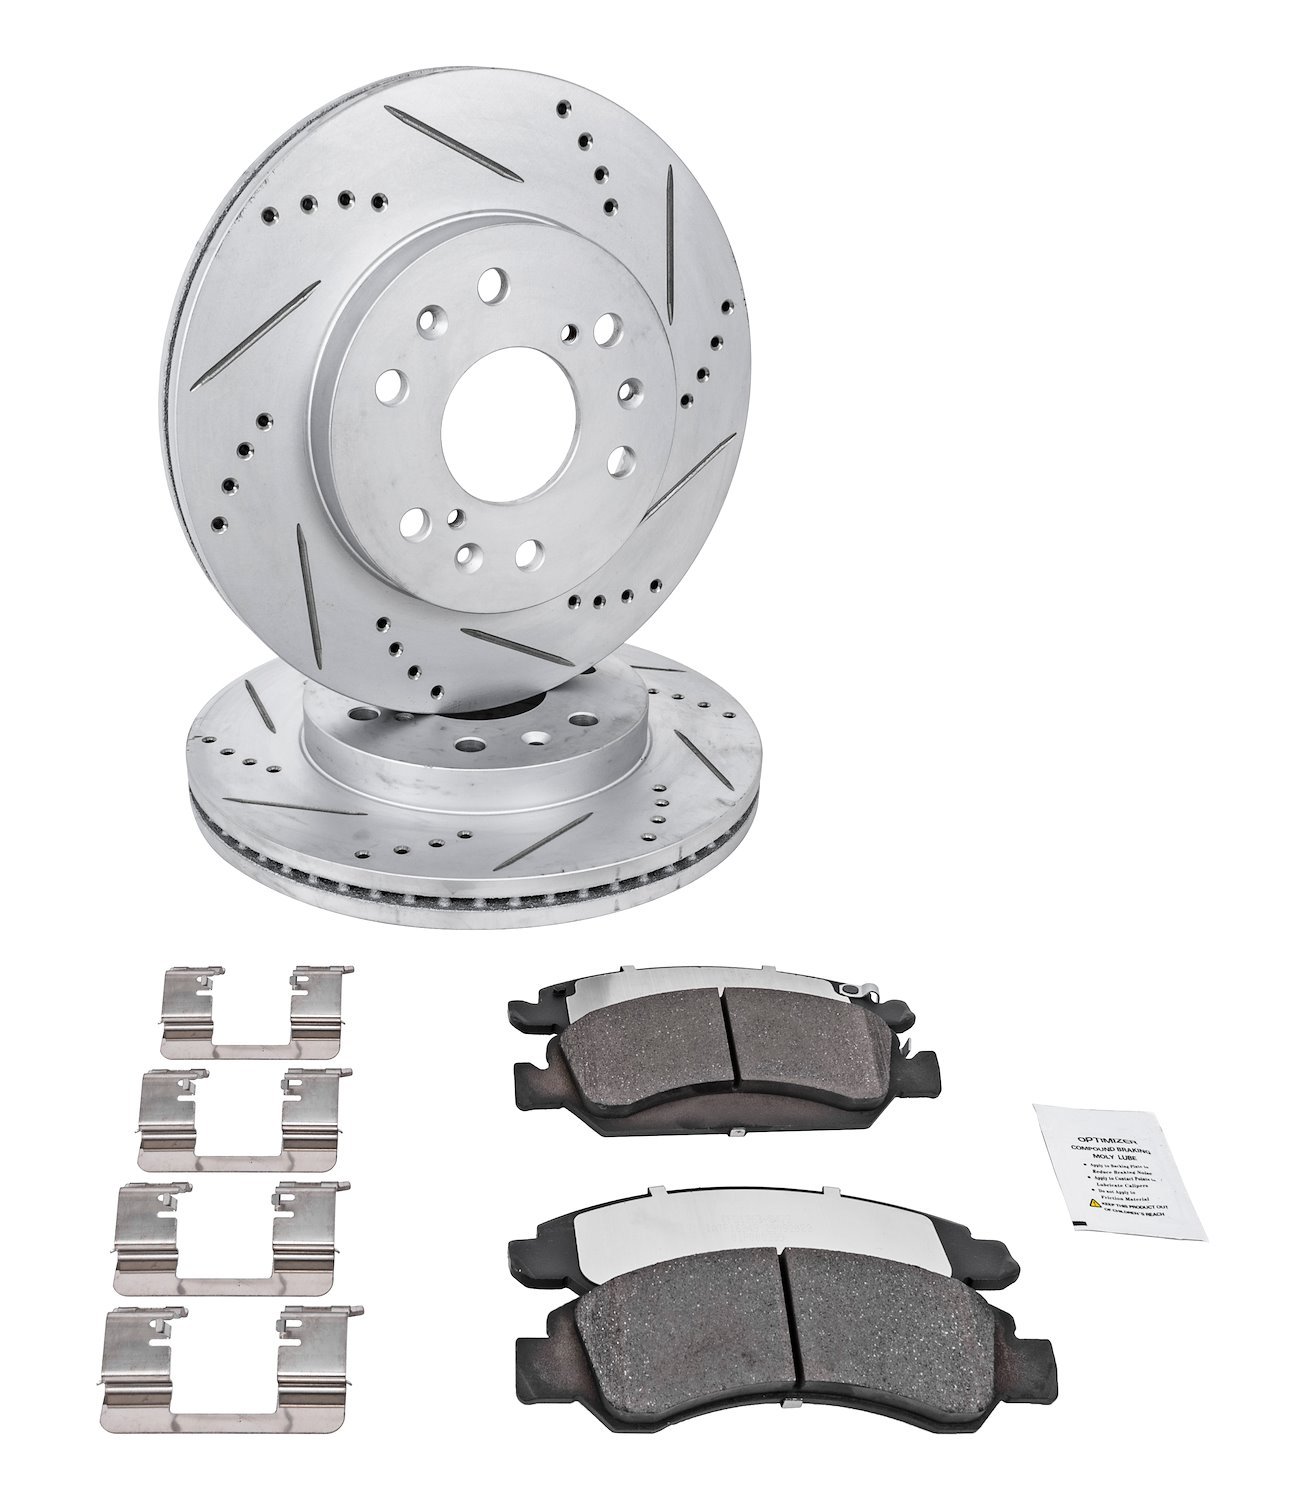 Truck-N-Tow JX25 Brake Pads & Rotors Kit Fits Select 2007-2019 Cadillac Escalade, Chevrolet & GMC Trucks [Front]